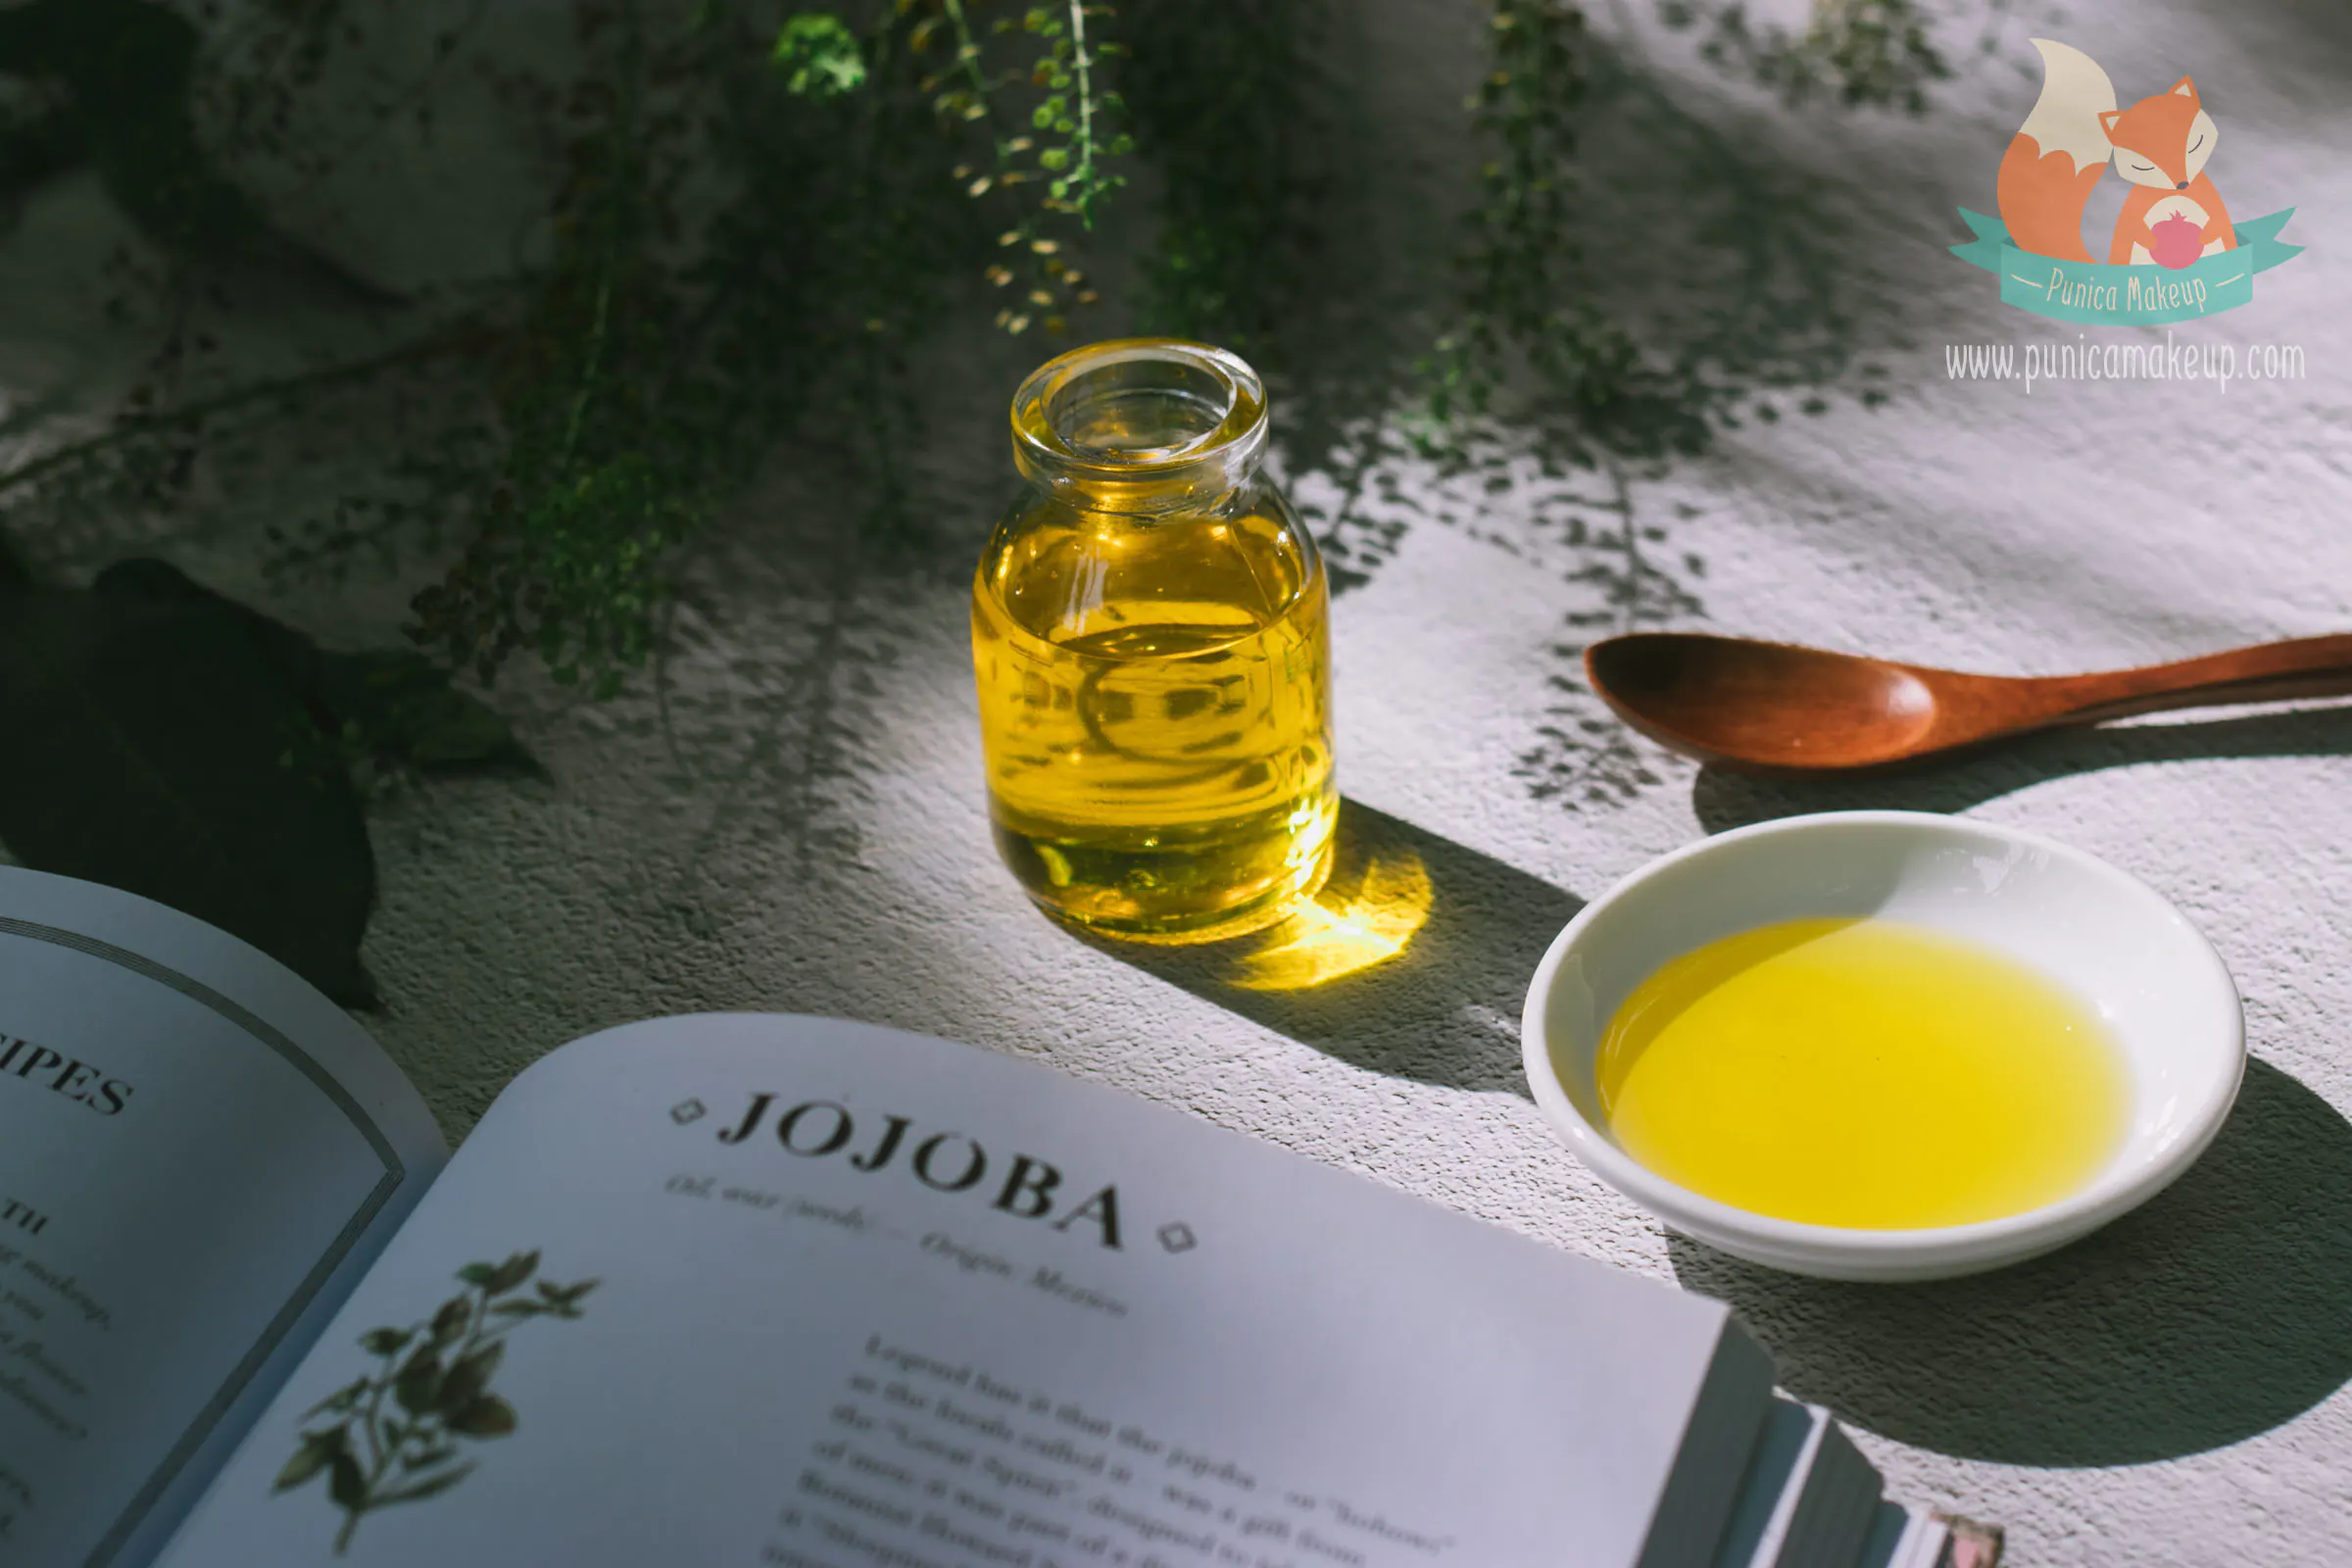 jojoba oil is good for acne prone skin